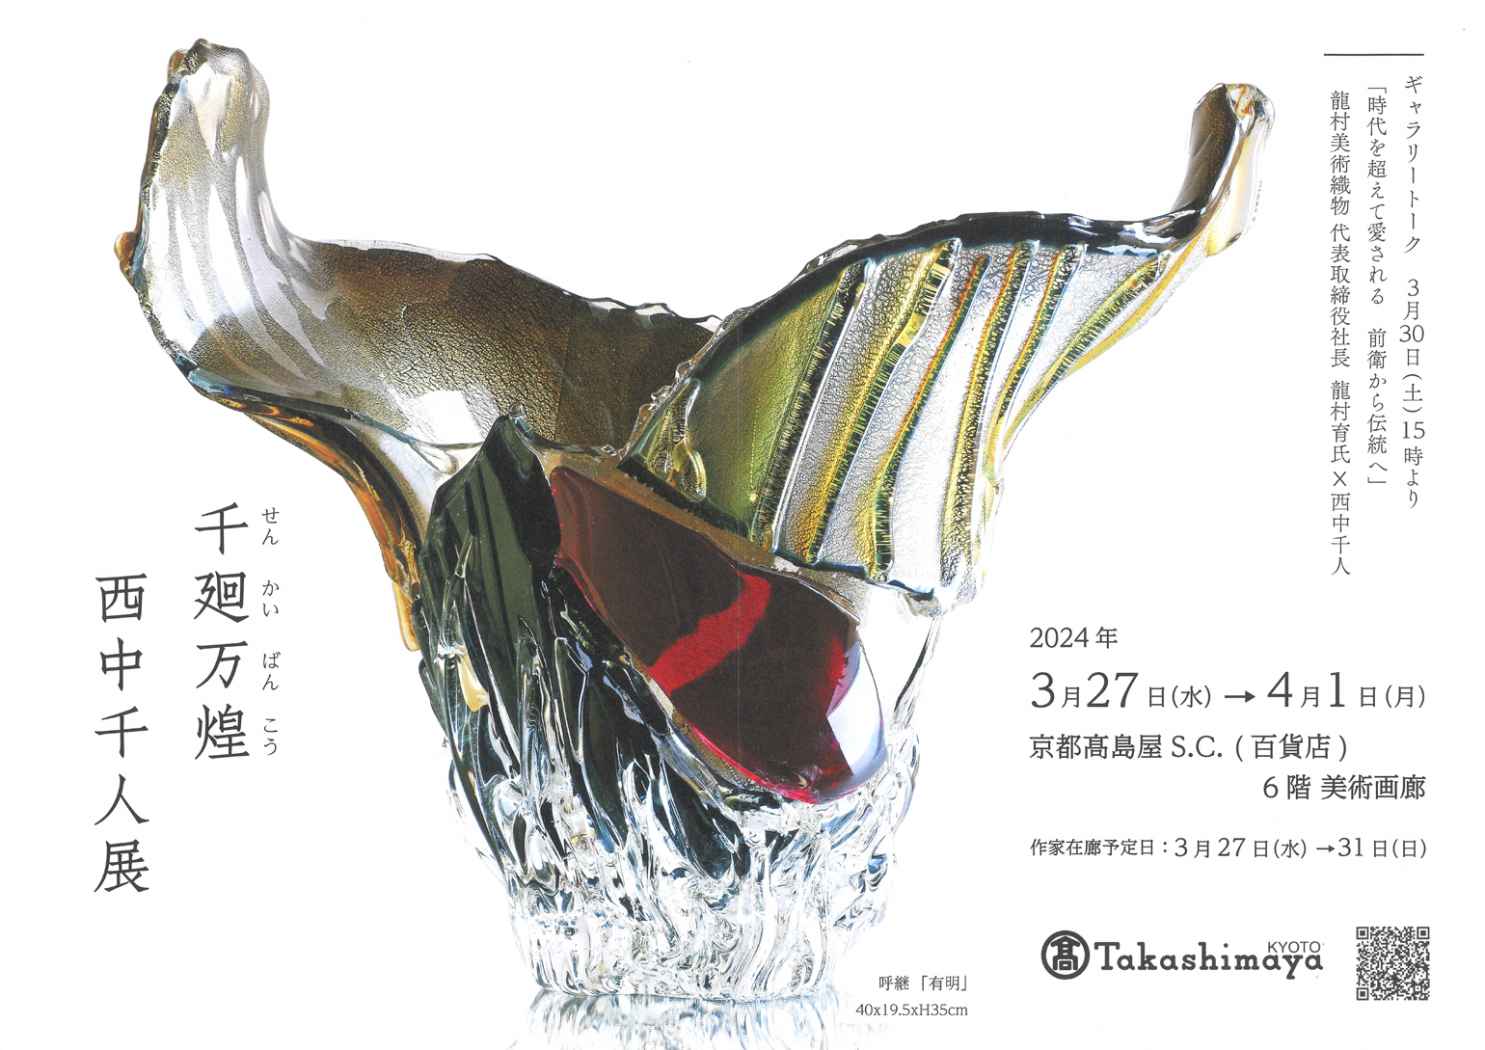 Gallery Talk by Iku Tatsumura & Yukito Nishinaka - Official Site 